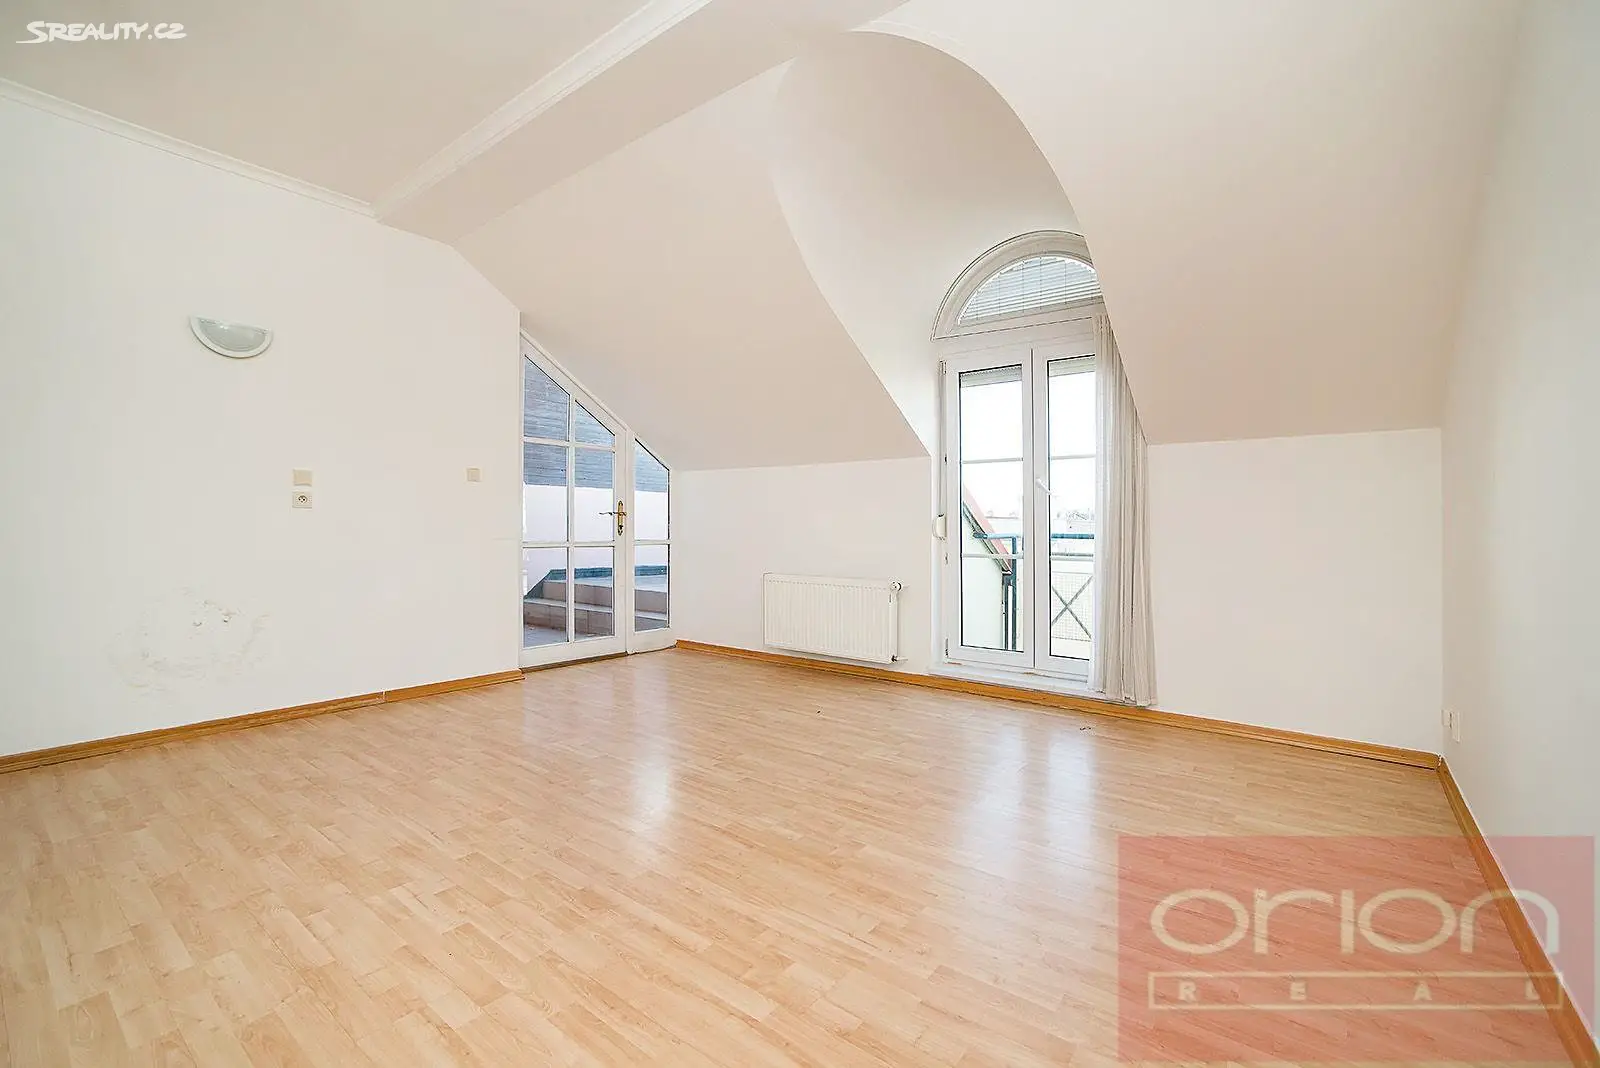 Pronájem bytu 4+1 205 m² (Mezonet), Italská, Praha 2 - Vinohrady